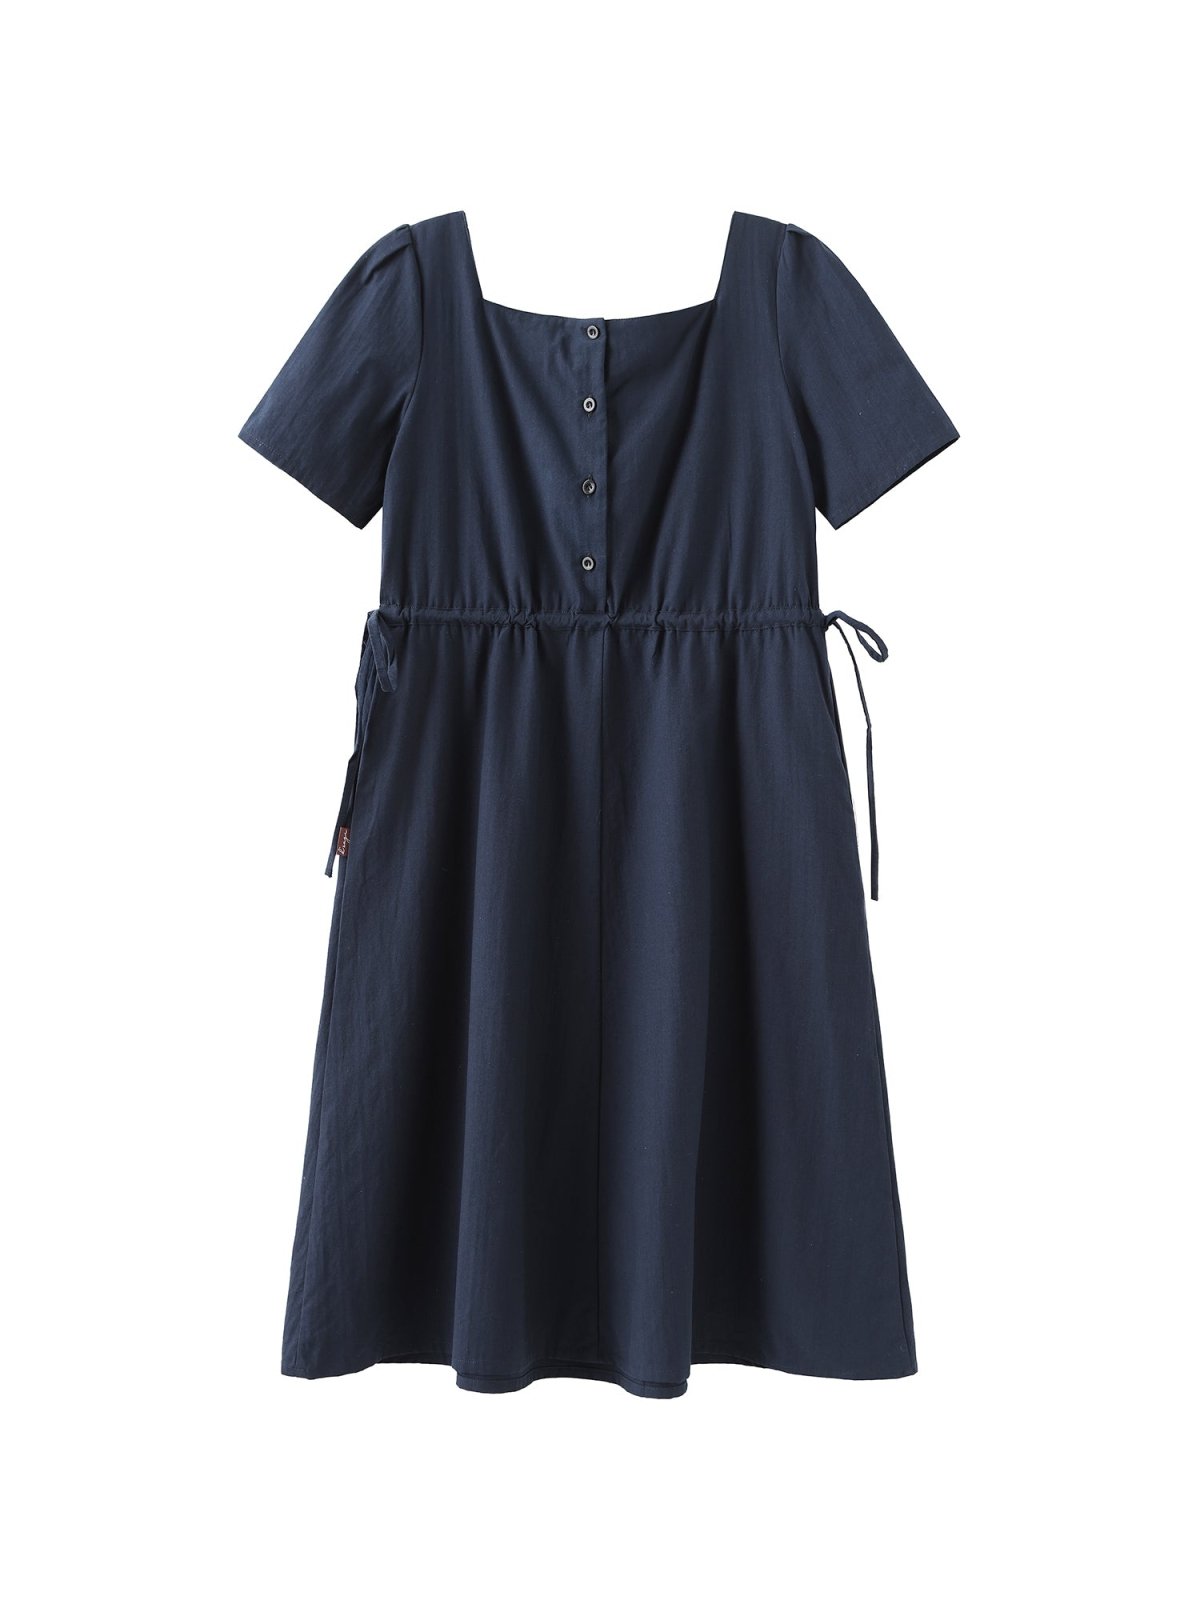 Kino Cotton Two-Way Square Neck Dress - DAG-DD0155-23NavyF - Navy Blue - F - D'ZAGE Designs